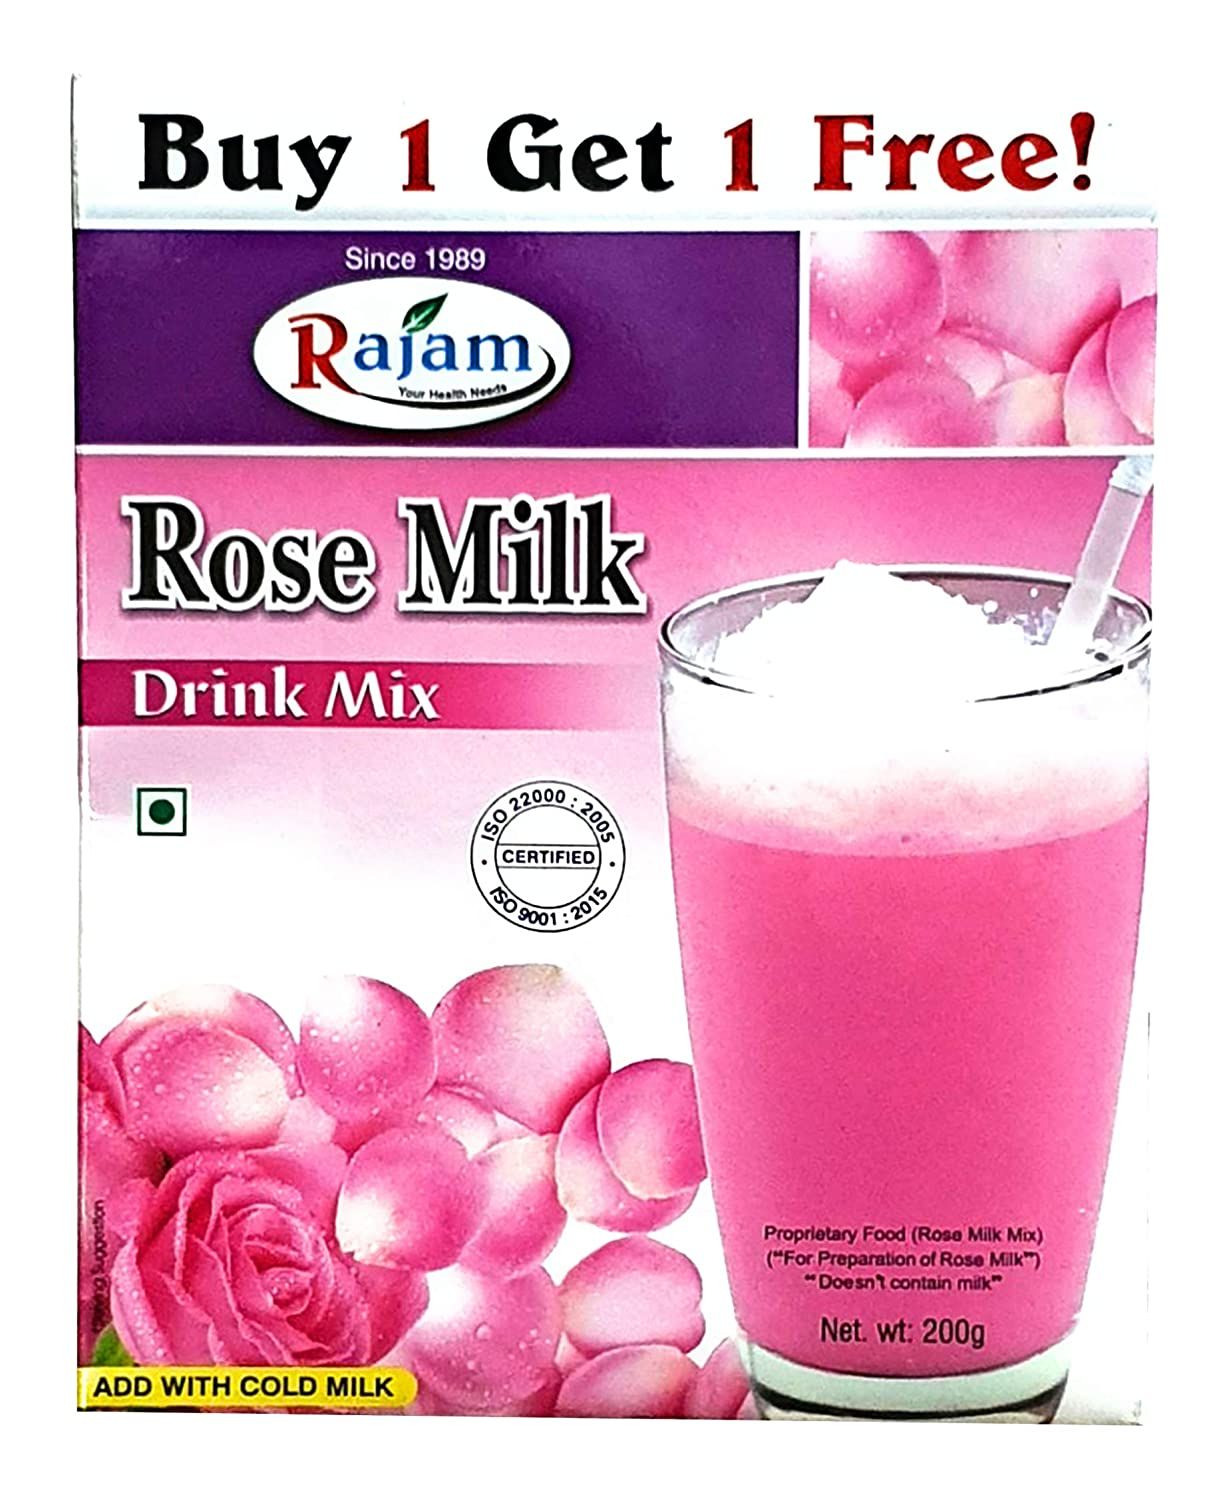 Rajam Rose Milk Drink Mix Image